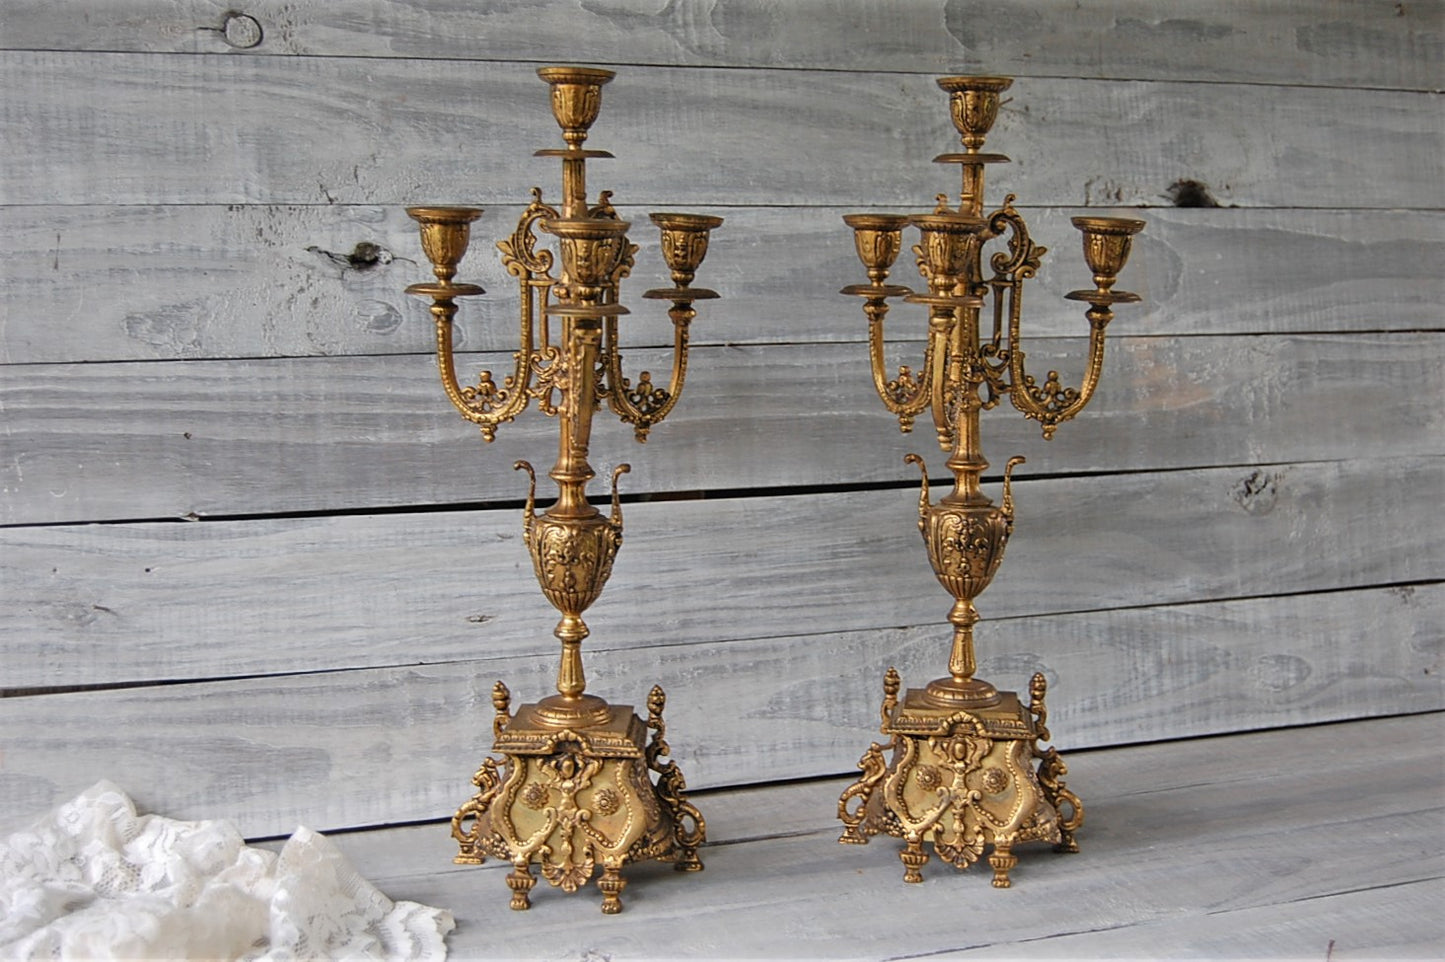 Antique bronze candelabras